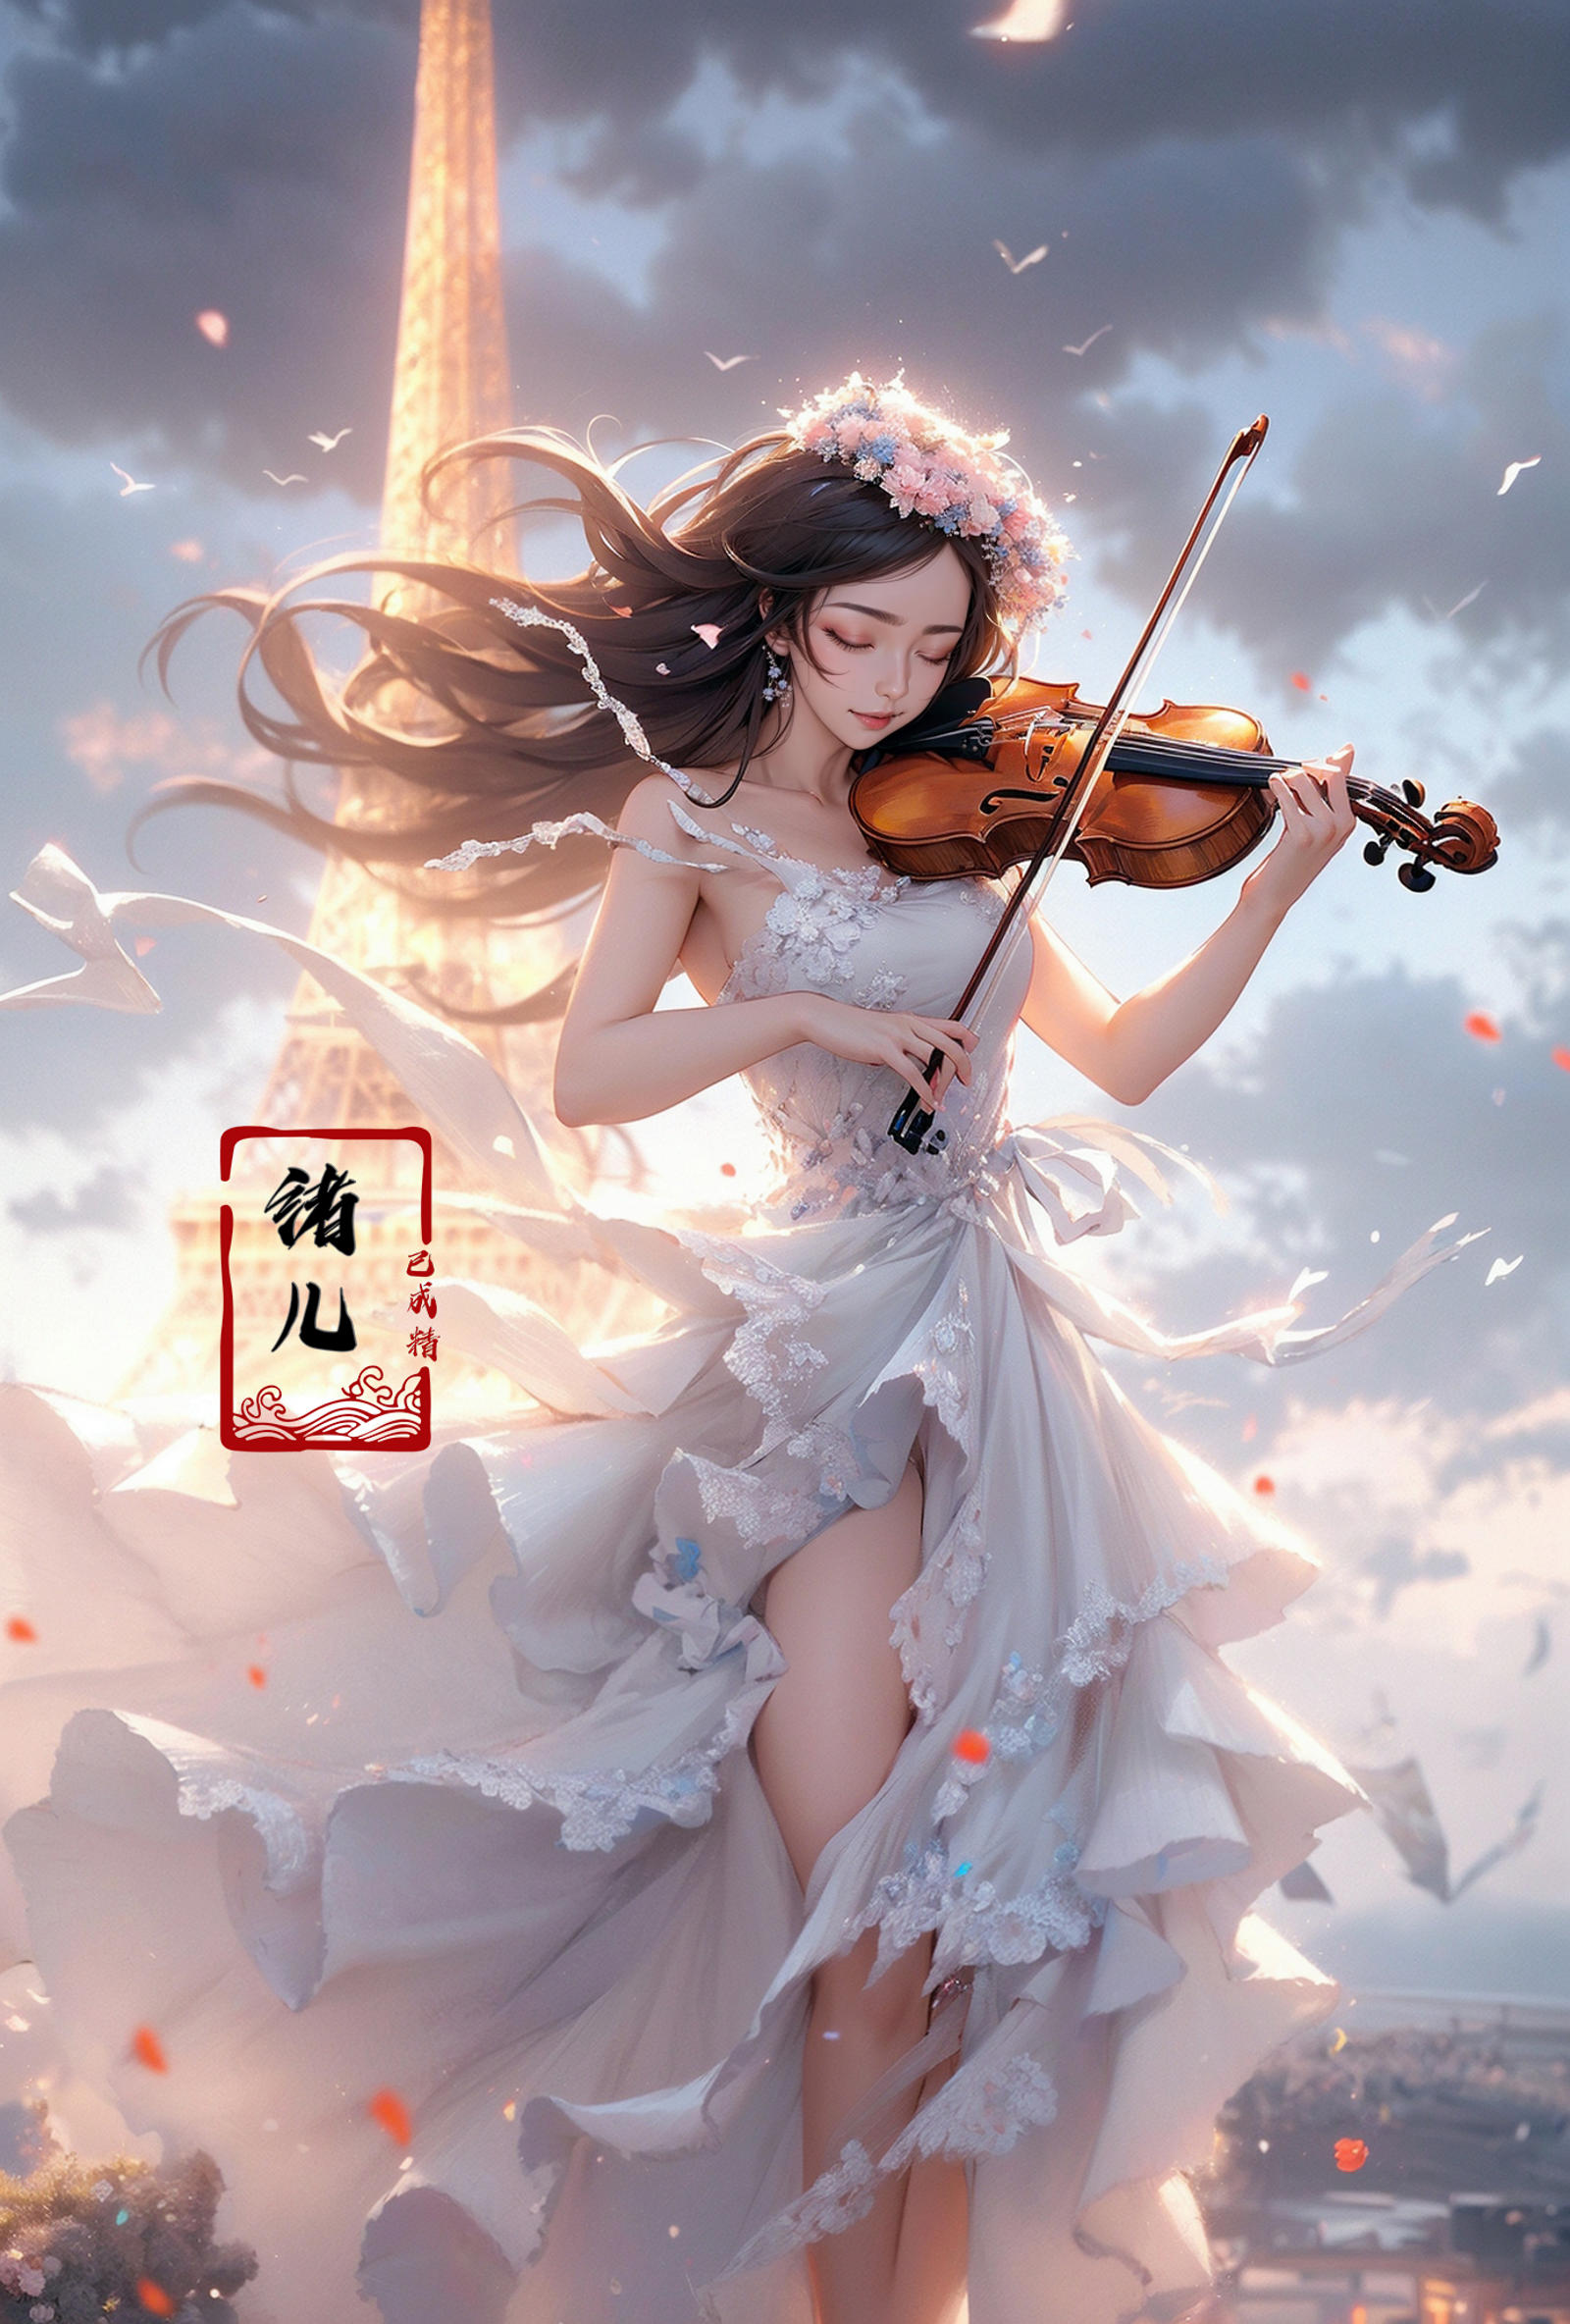 绪儿-小提琴 violin image by XRYCJ